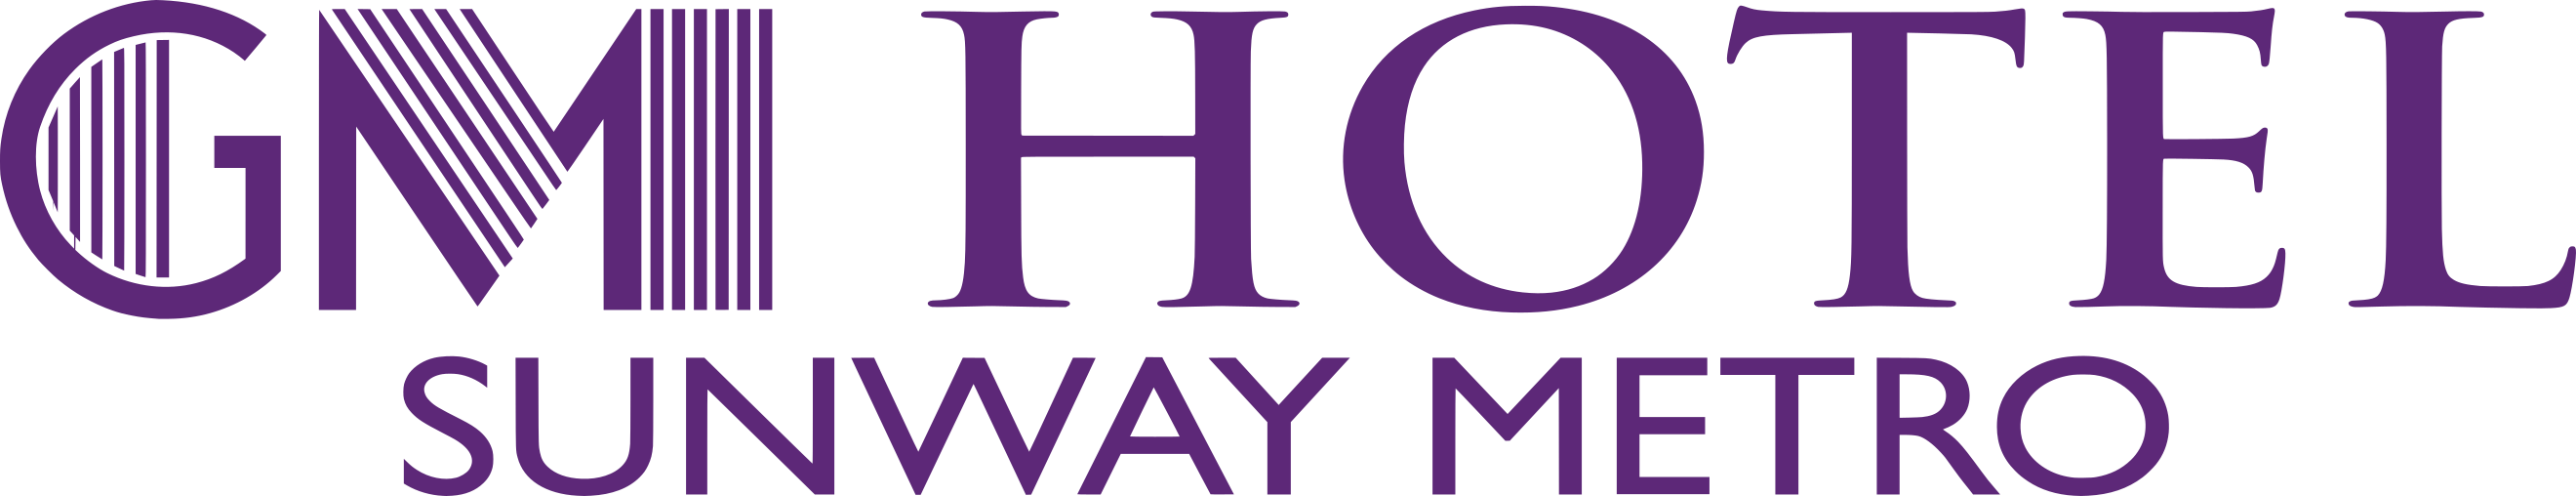 GM Hotel Sunway Metro logo